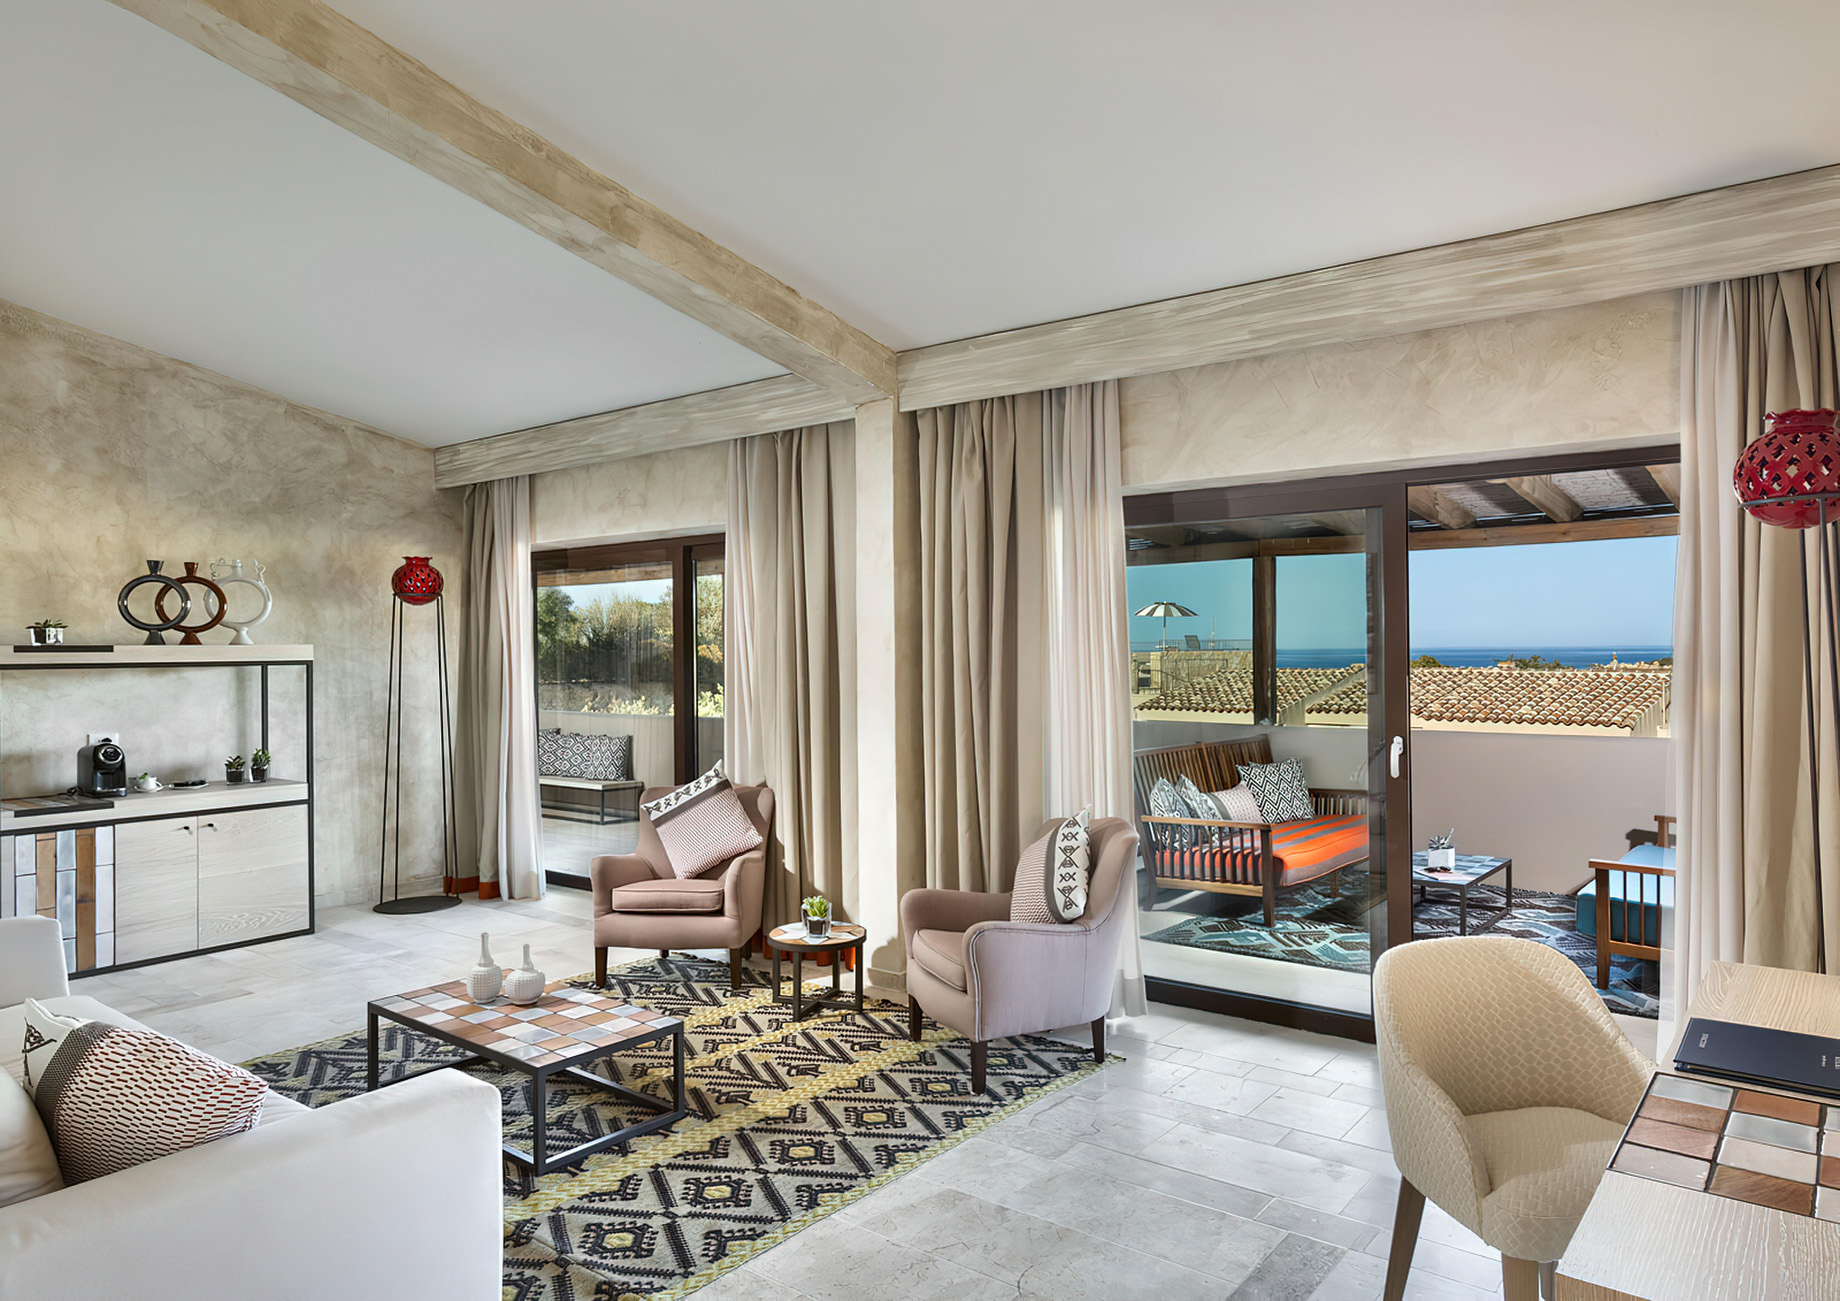 Baglioni Resort Sardinia – San Teodoro, Sardegna, Italy – Tavolara Suite Living Room